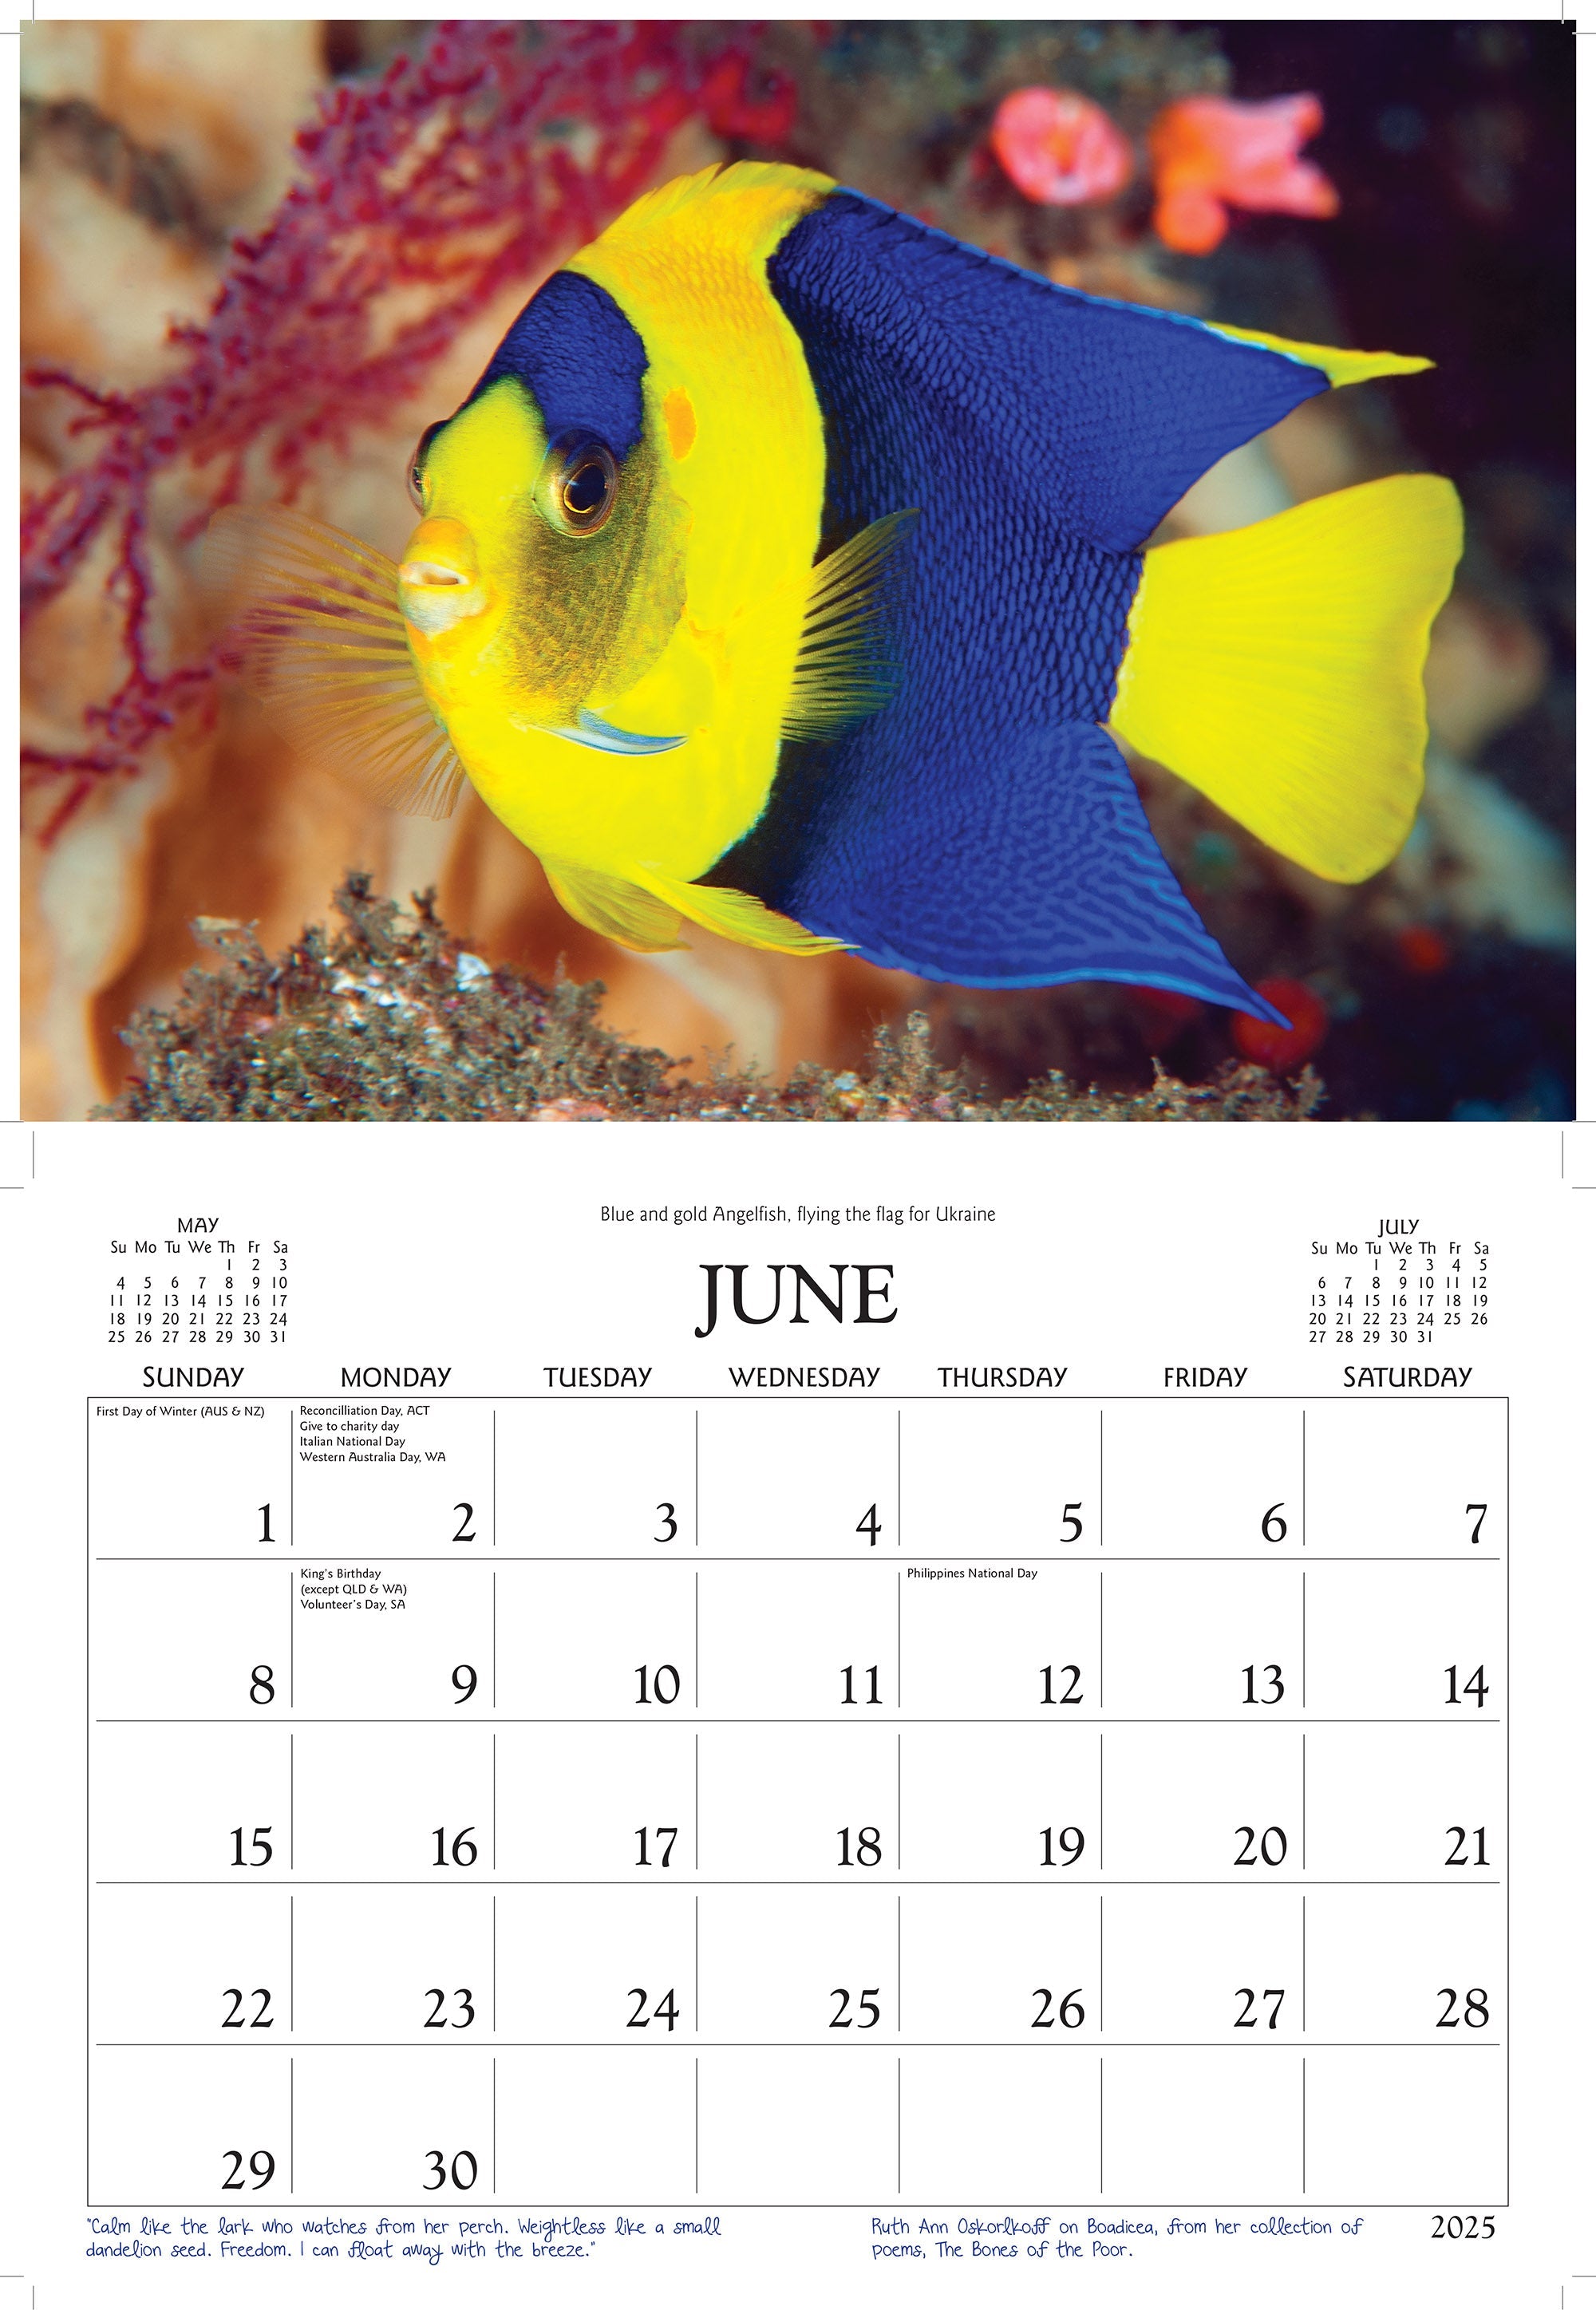 2025 Great Barrier Reef By David Messent - Horizontal Wall Calendar